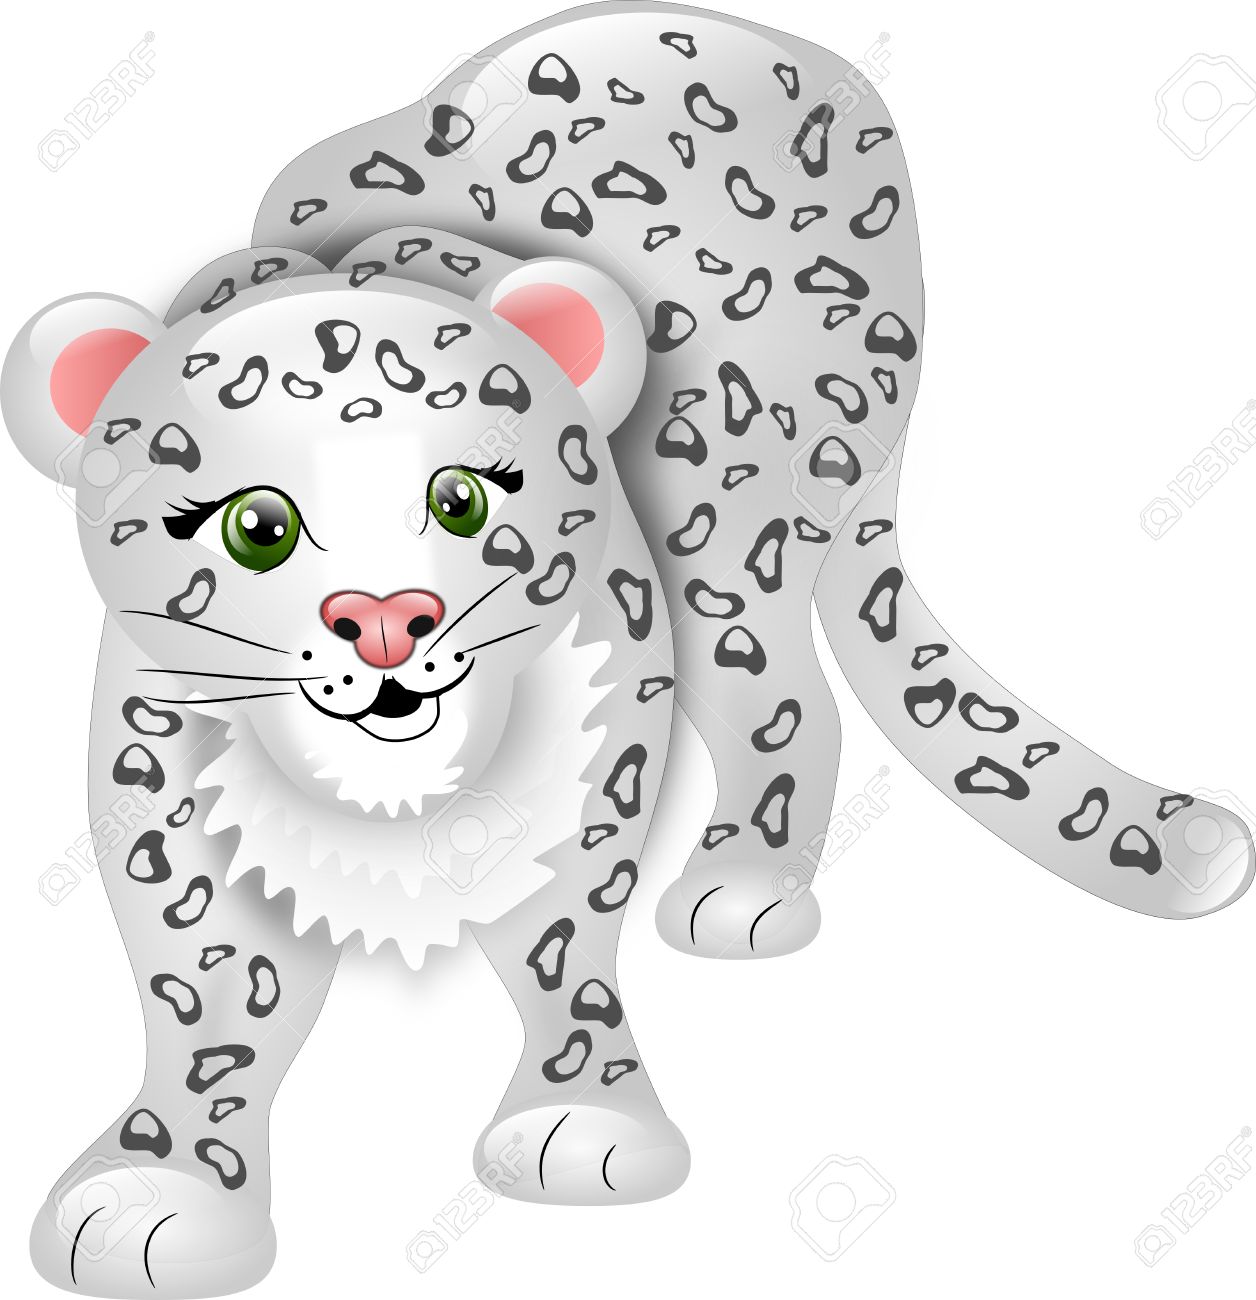 snow leopard: Cartoon snow le - Snow Leopard Clipart